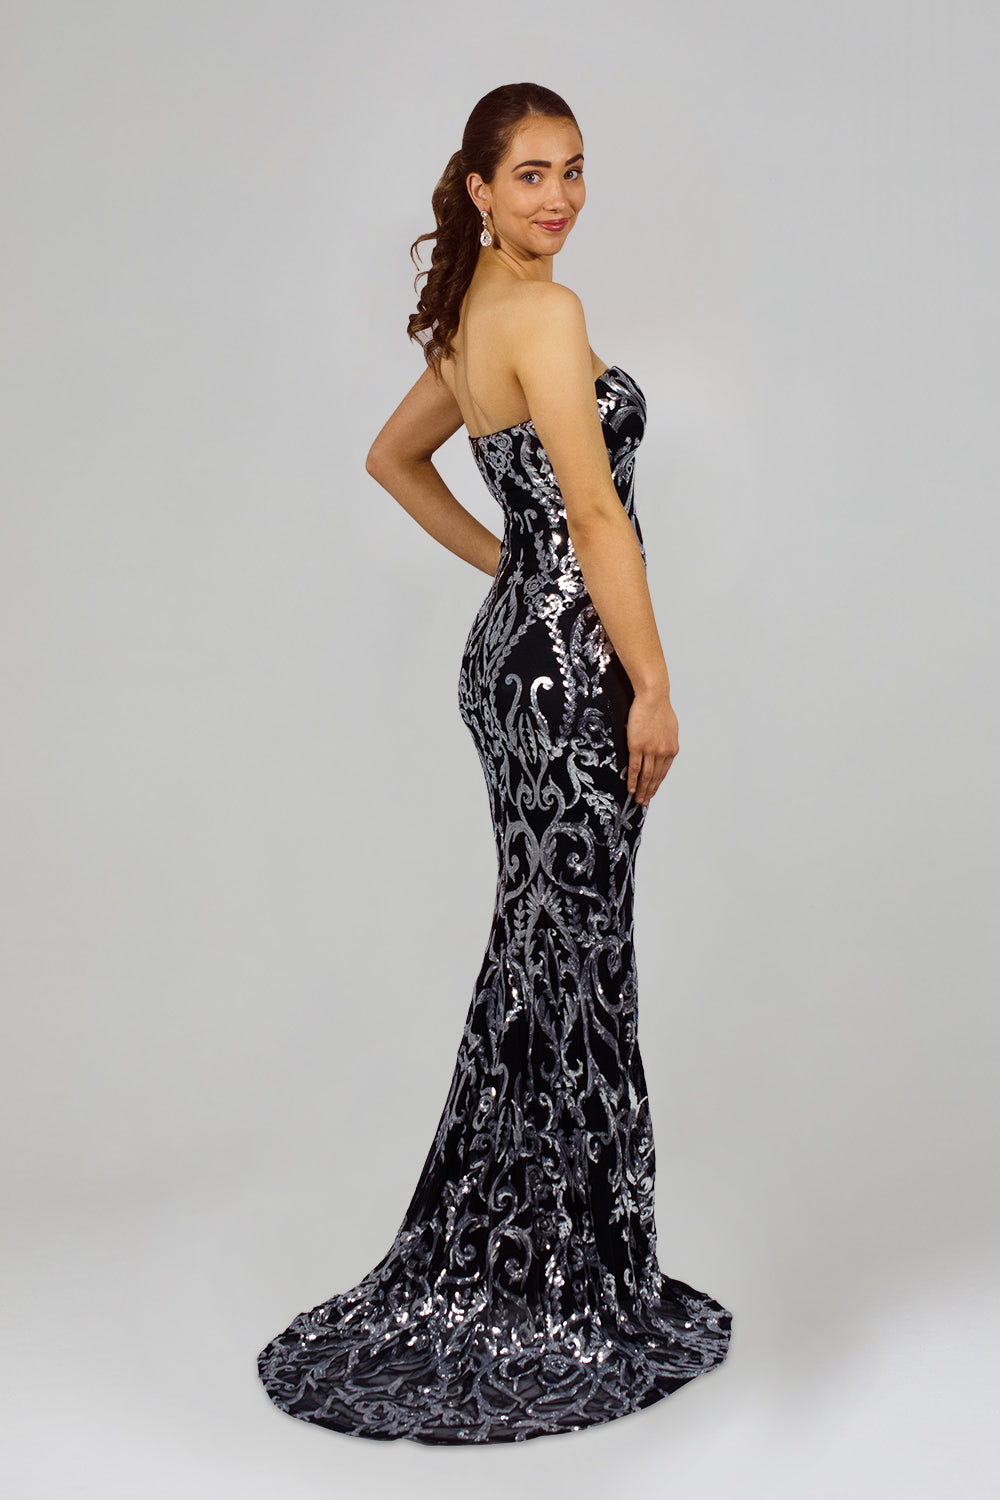 silver seqins ball dresses perth australia online enviou sbridal formal custom made